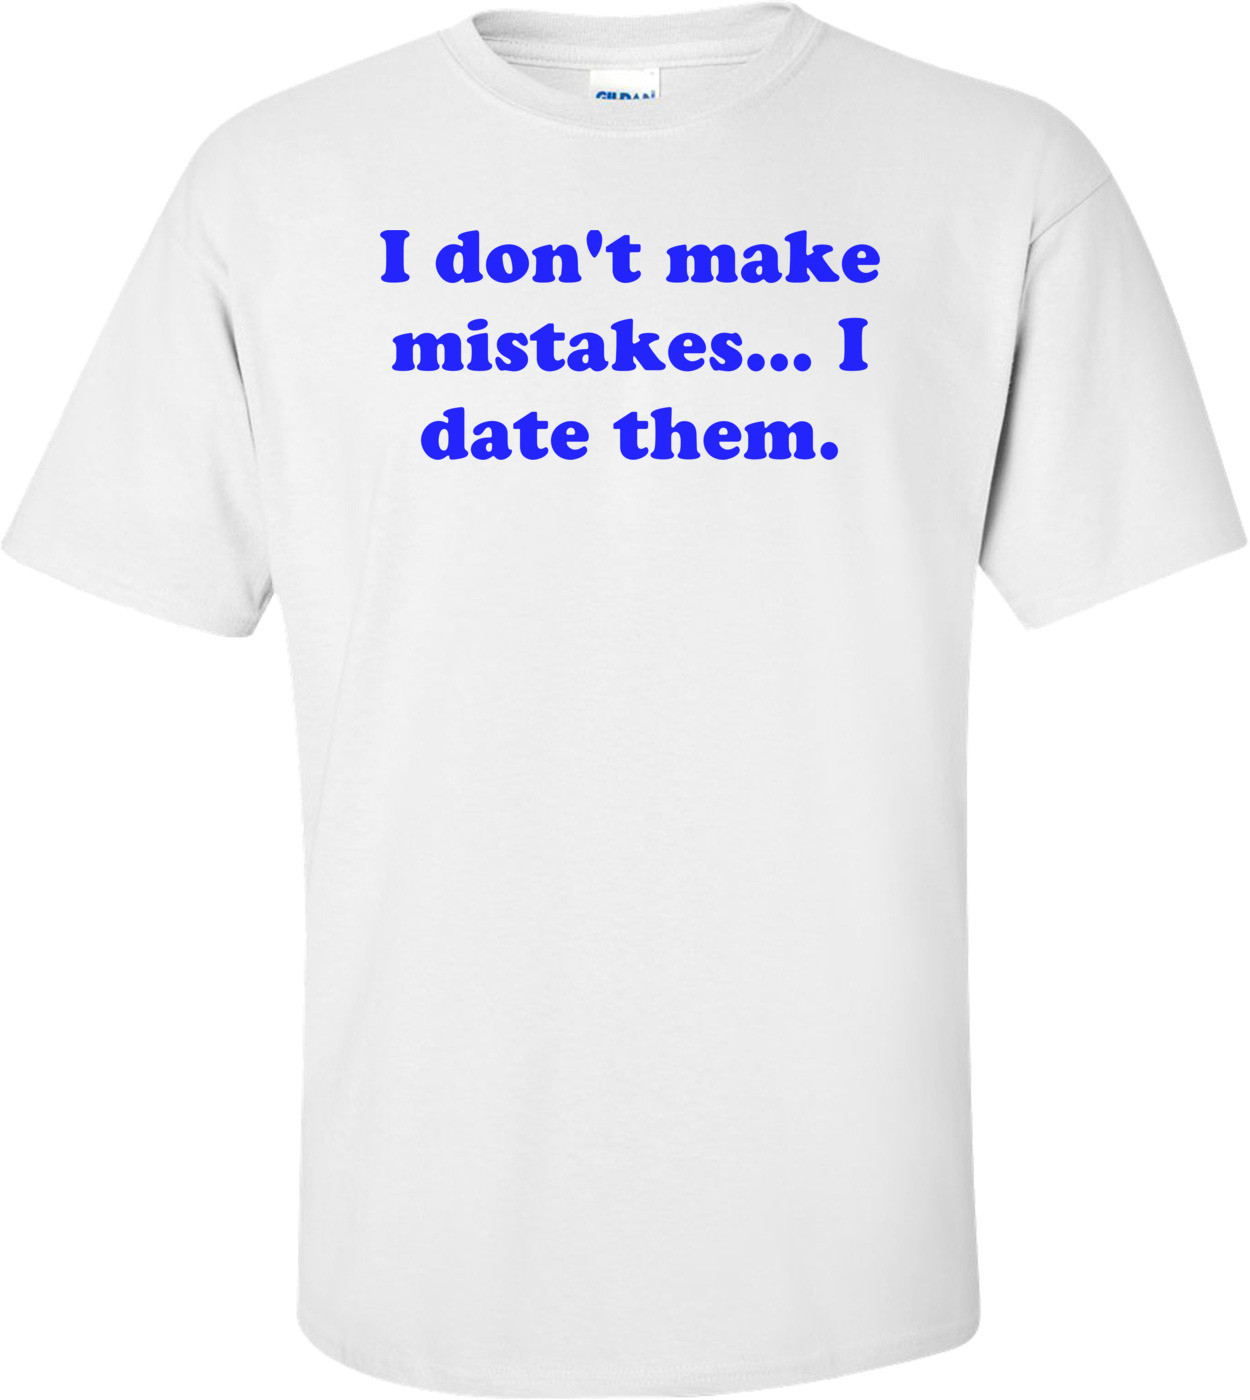 I don't make mistakes... I date them. Shirt